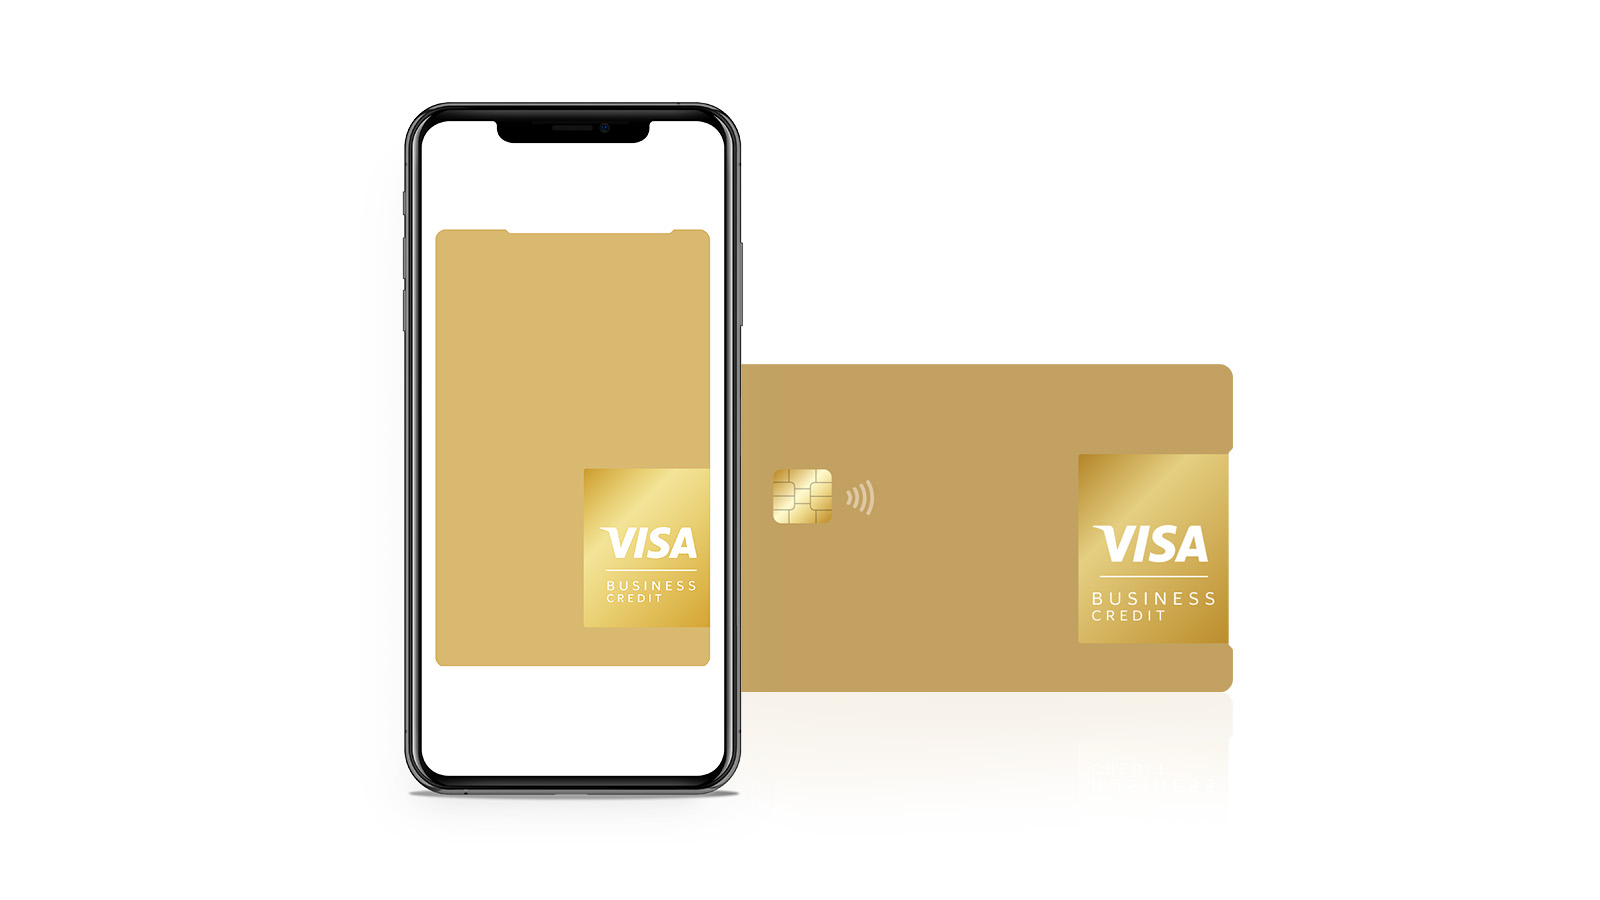 visa business credit card and mobile